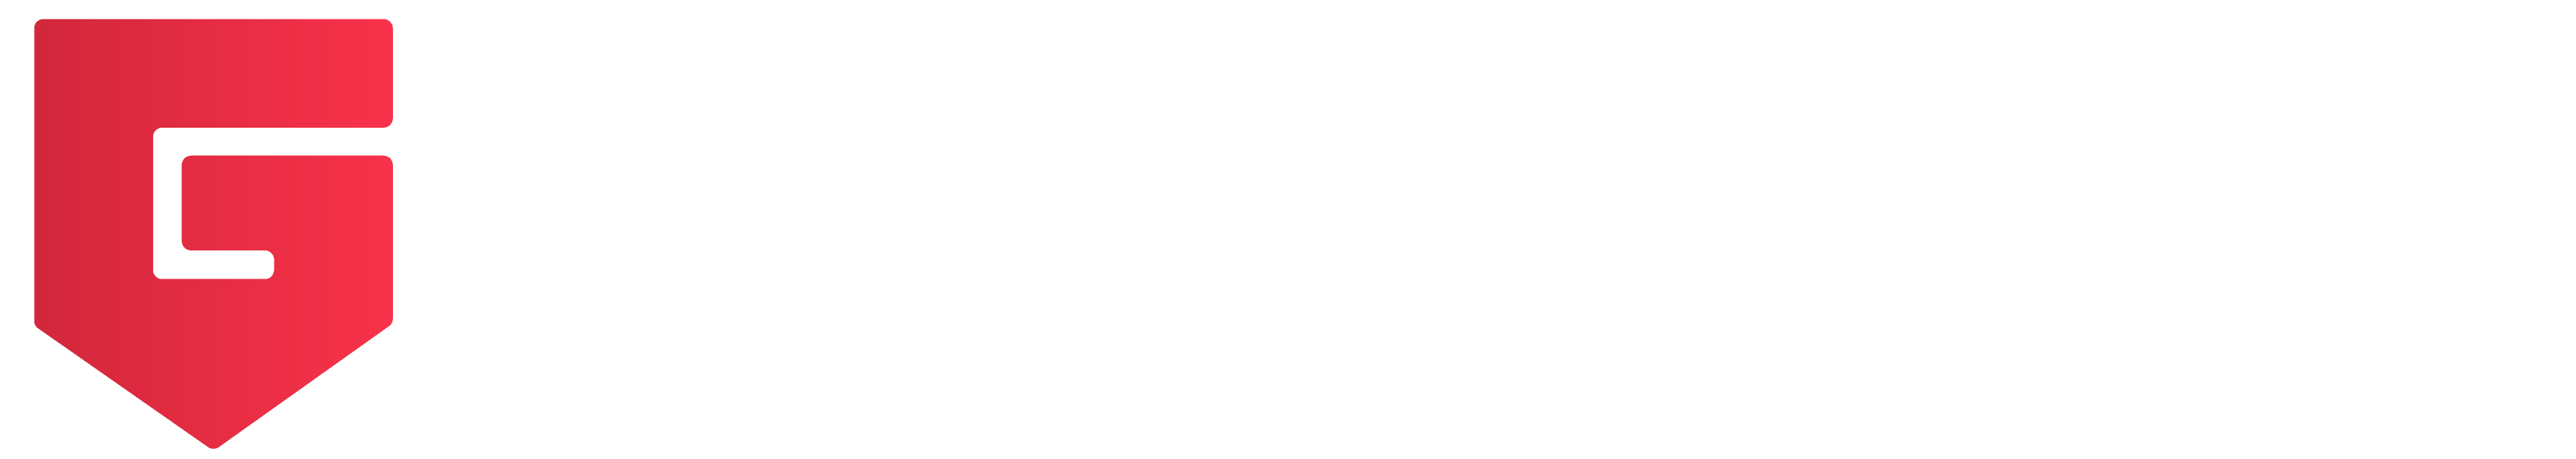 Gaming stars net logo